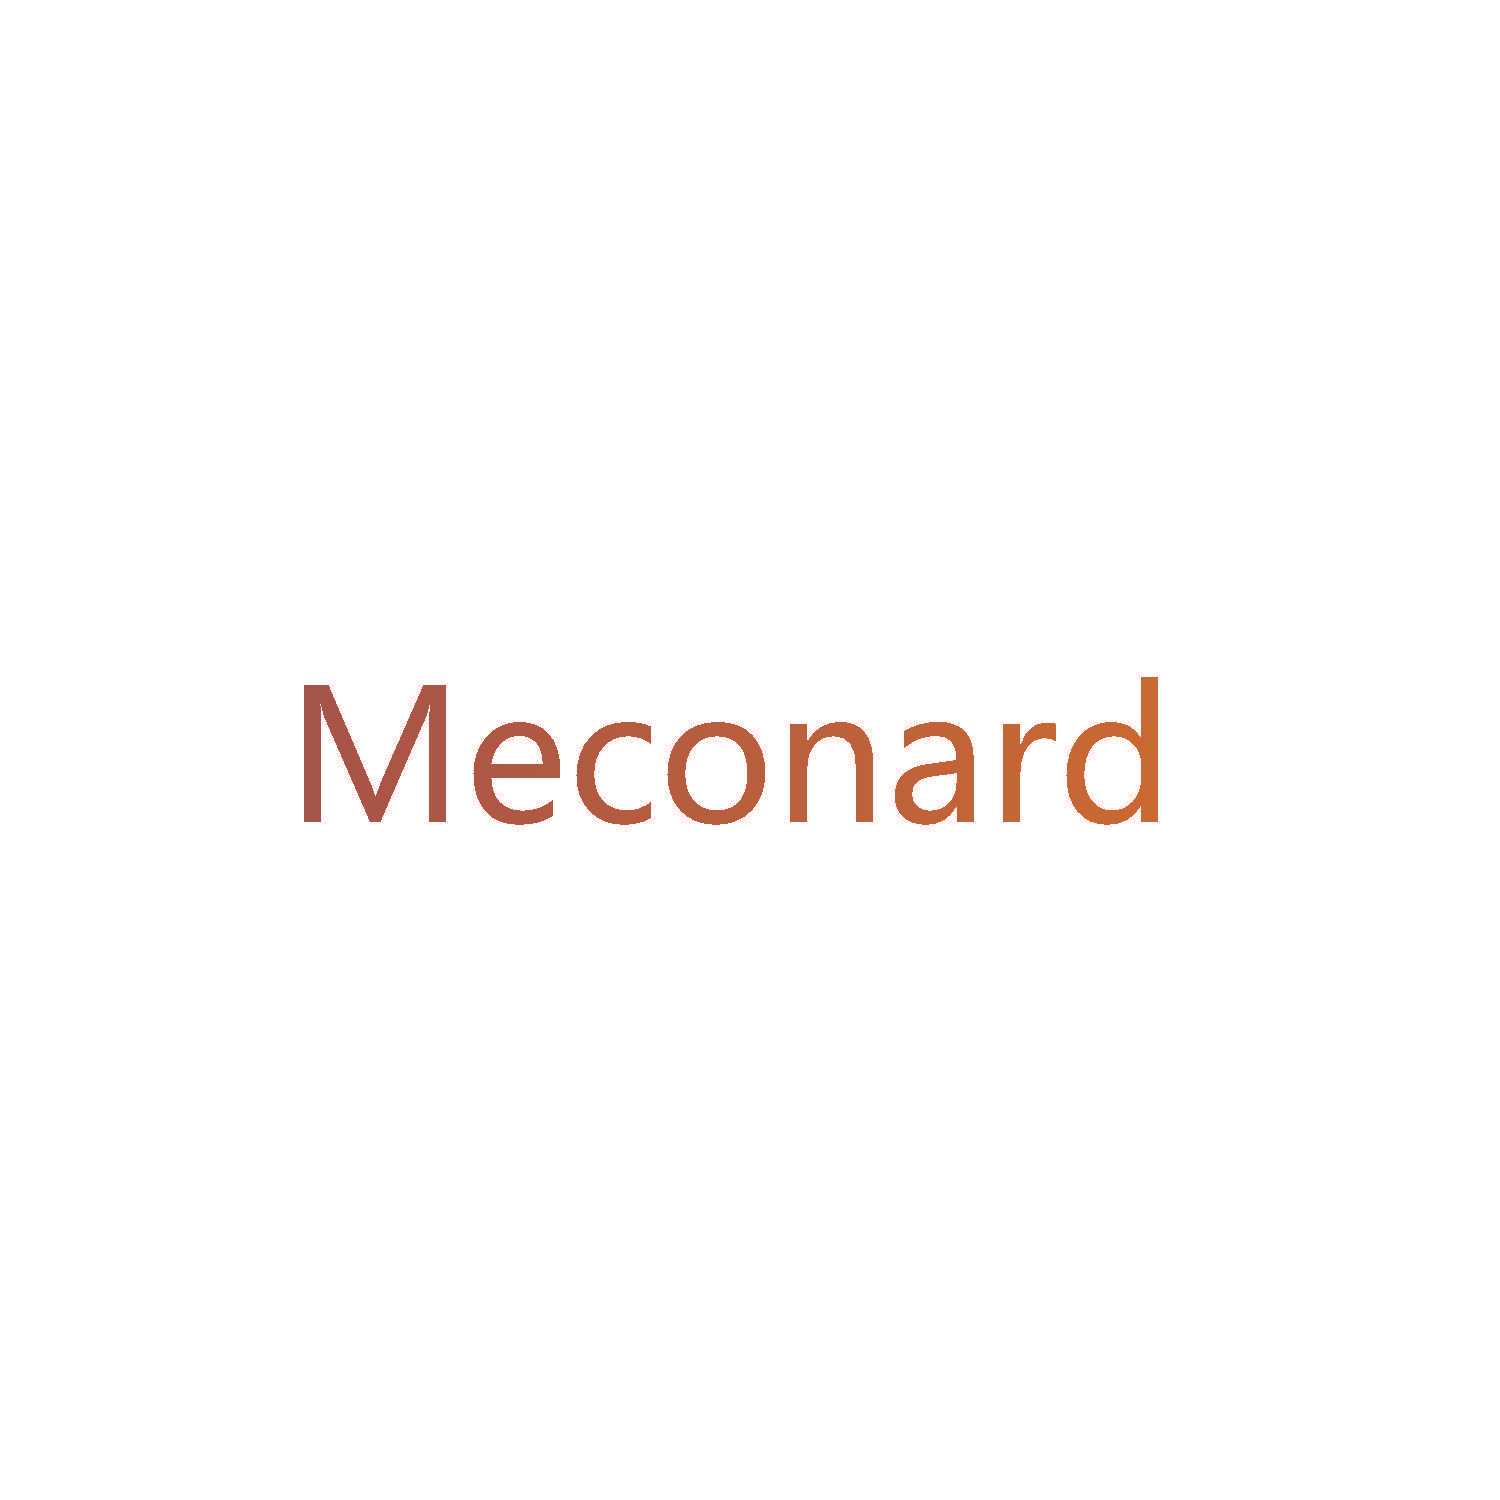 Meconard